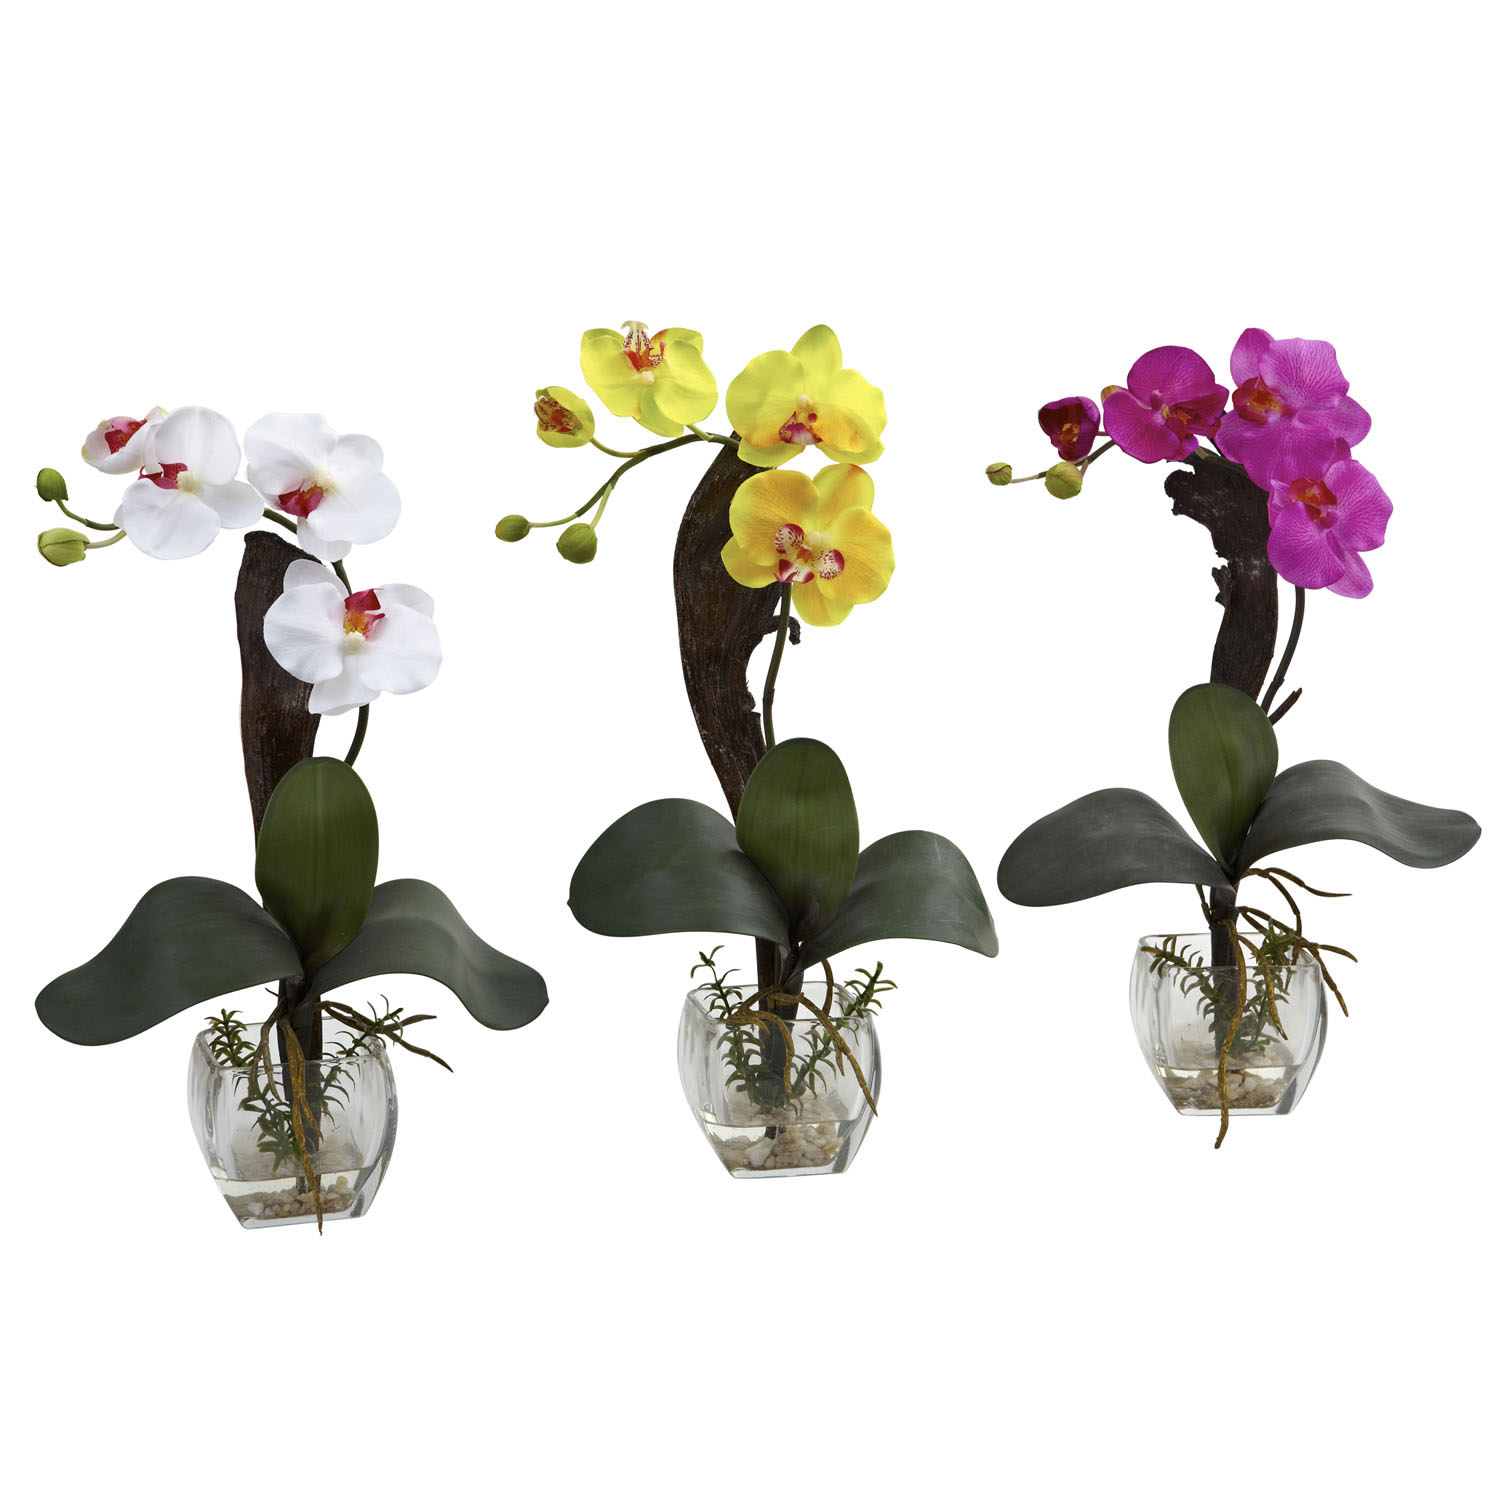 16 Inch Mini Phalaenopsis Orchid Arrangement In Glass Vase (set Of 3)